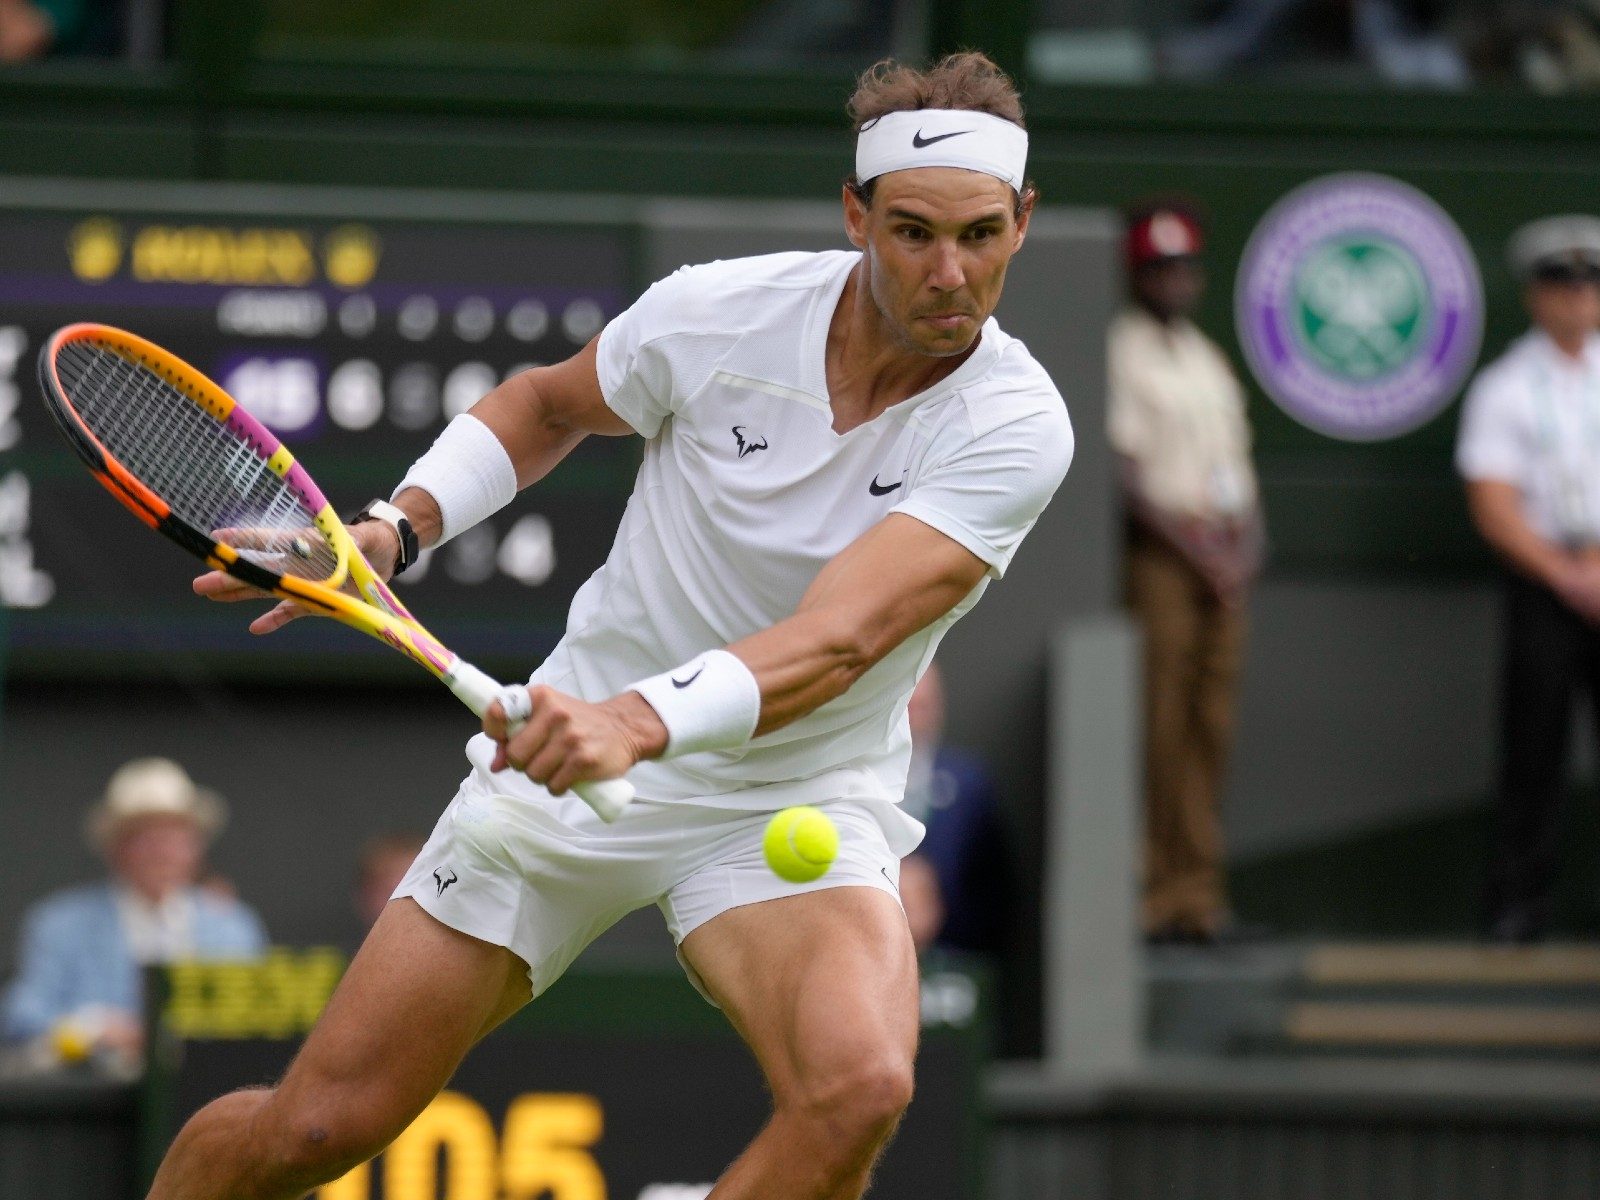 Wimbledon 2022 Rafael Nadal Wins Five Set Battle to Set Up Semis Clash Against Nick Kyrgios